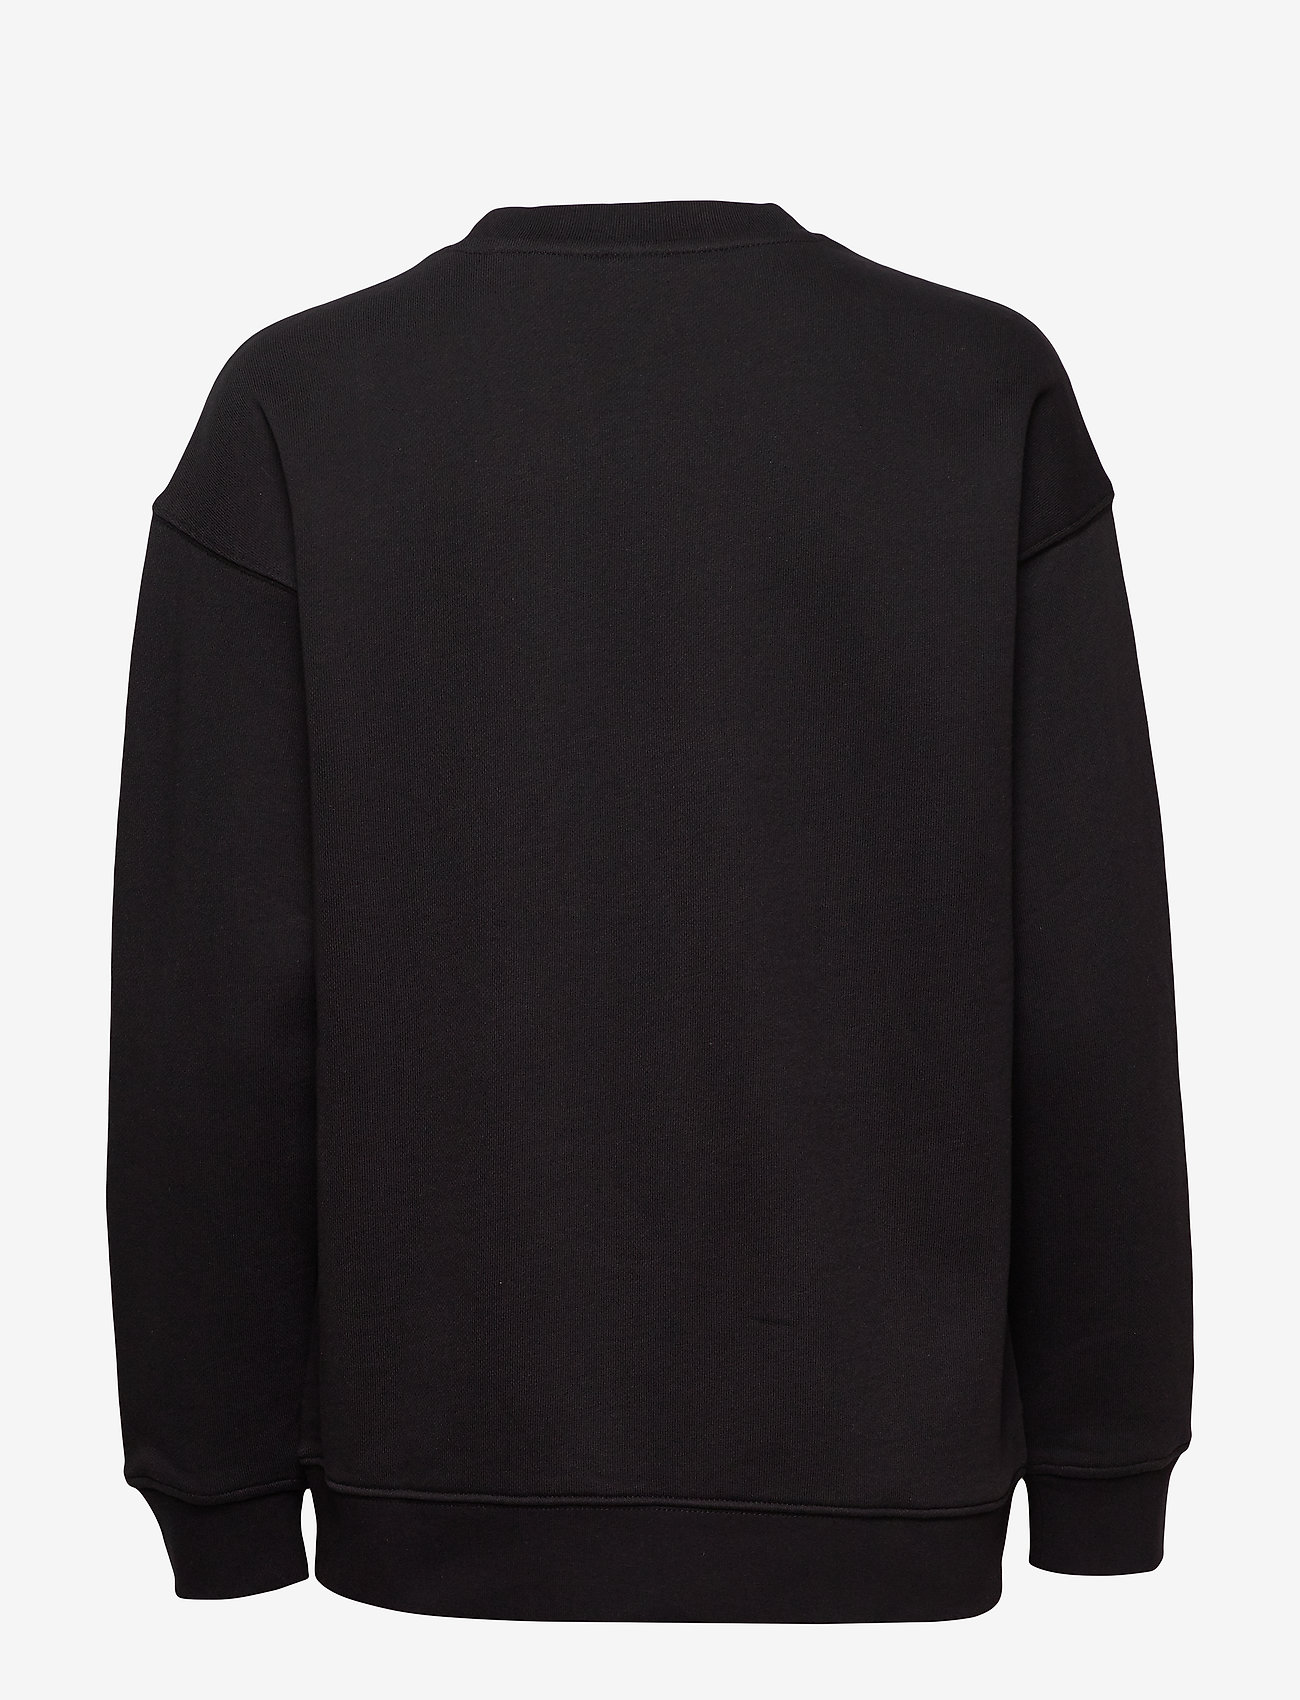 adidas Originals - Trefoil Crew Sweatshirt - sweatshirts - black/white - 1